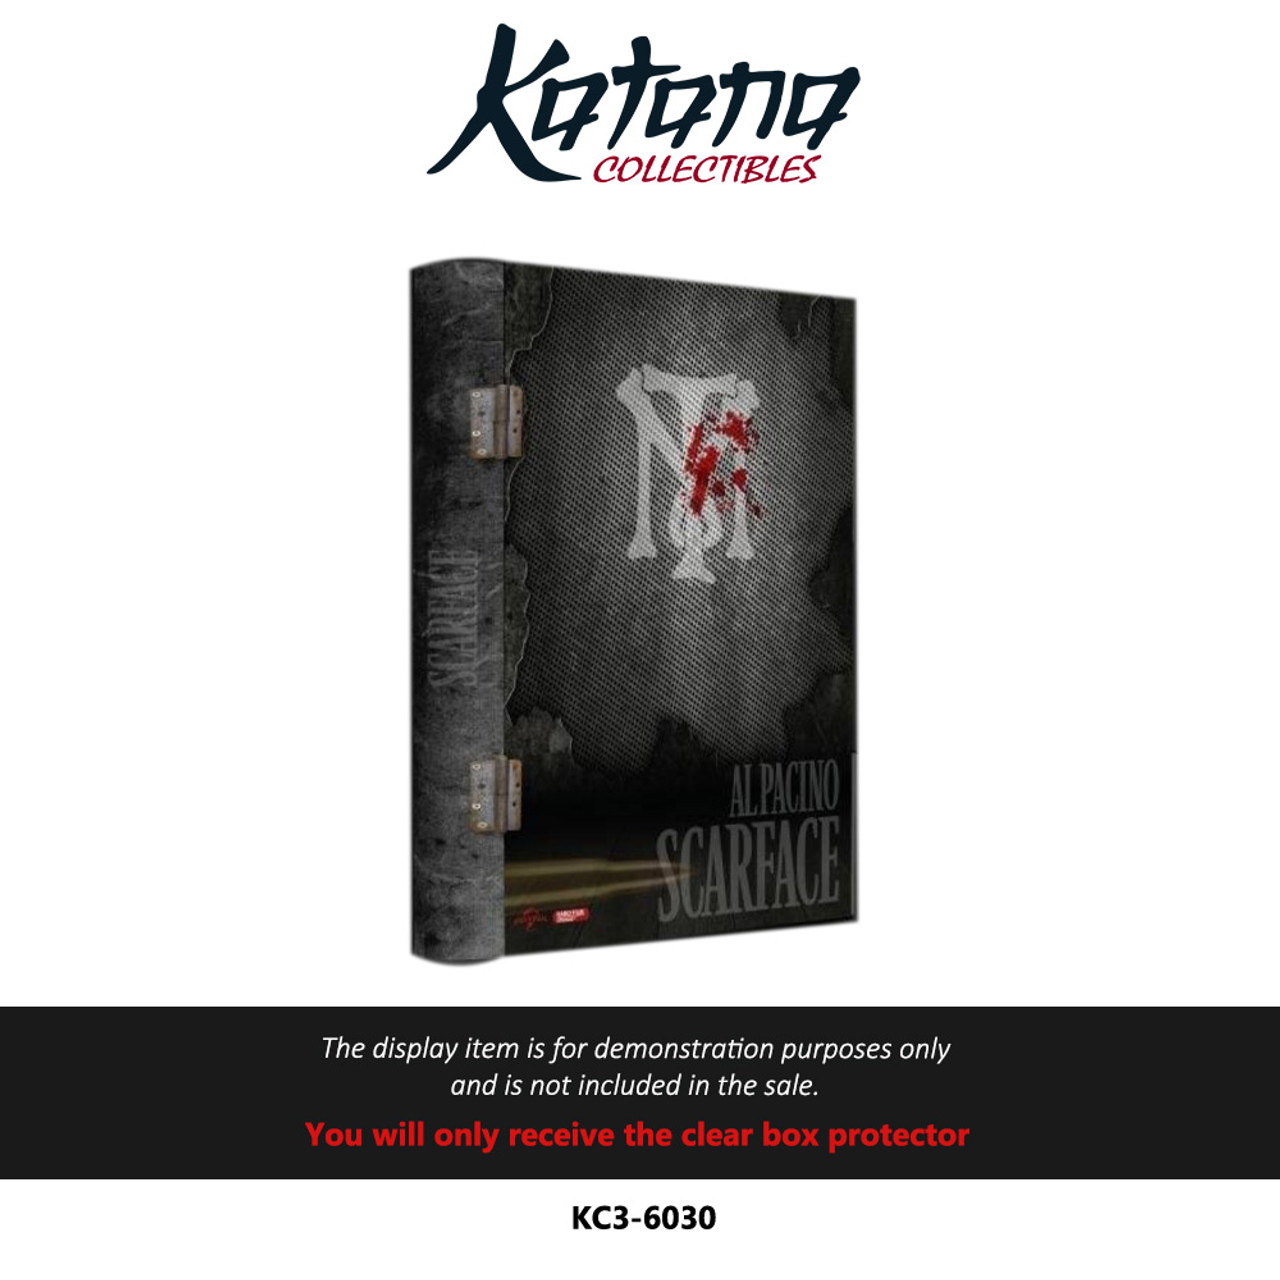 Katana Collectibles Protector For Scarface (RaroFilm Studios Exclusive #006) (4K UHD/2D Blu-ray)